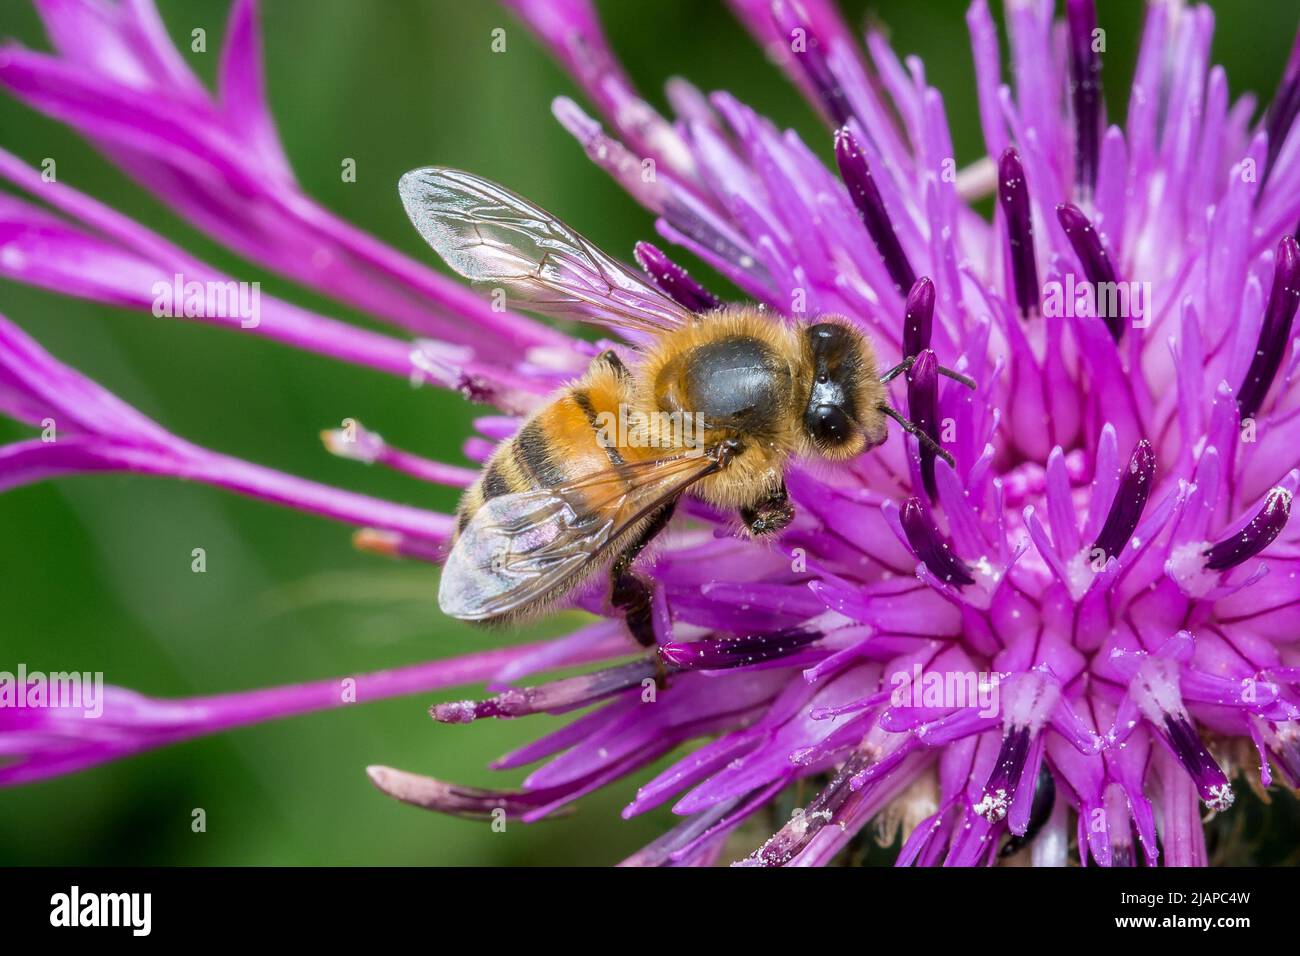 A European honeybee (Apis mellifera) on a purple flower. taken at Nose's Point, Seaham, UK Stock Photo